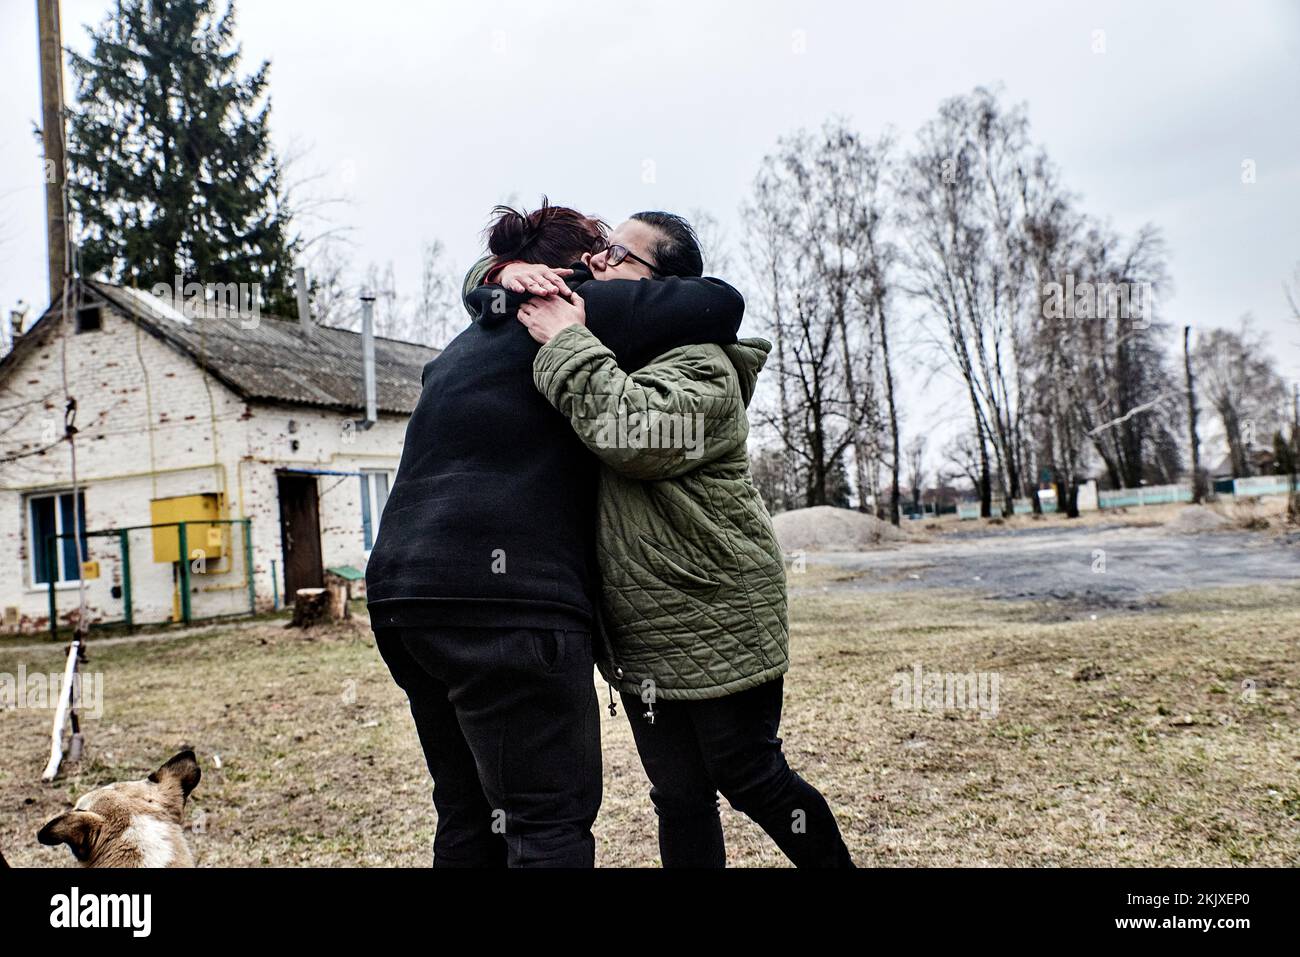 Antonin Burat / Le Pictorium -  War in Ukraine: David stands up to Goliath -  26/3/2022  -  Ukraine / OBLAST OF KYIV  -  Two Ukrainian women hug each Stock Photo